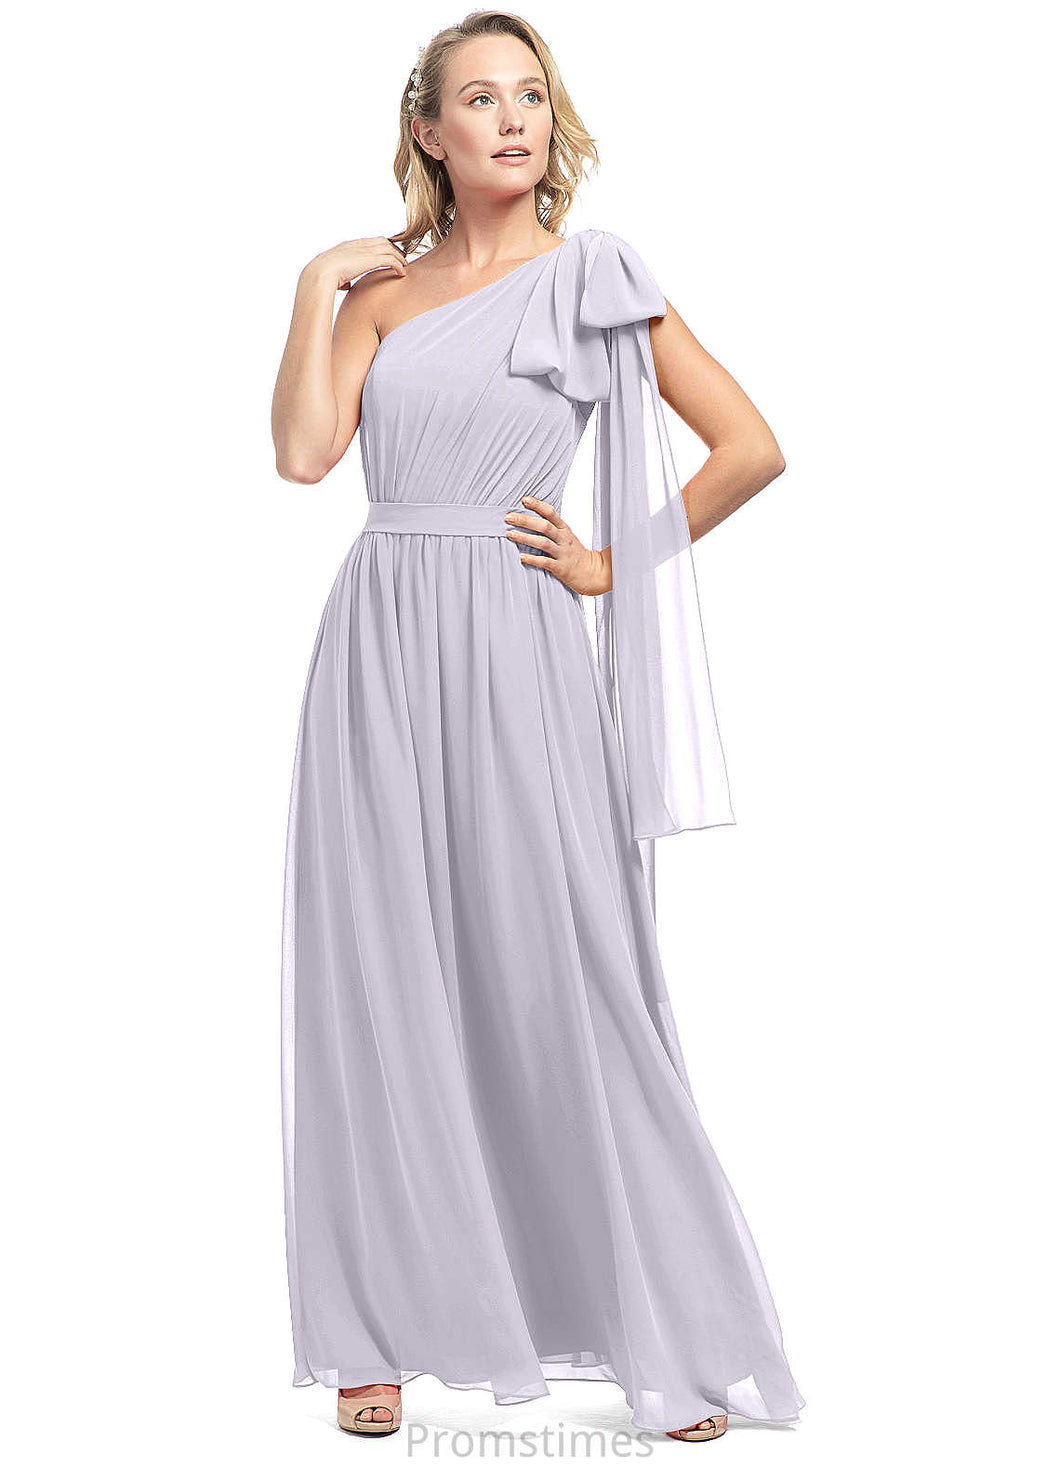 Jennifer Floor Length Halter Sleeveless A-Line/Princess Natural Waist Bridesmaid Dresses